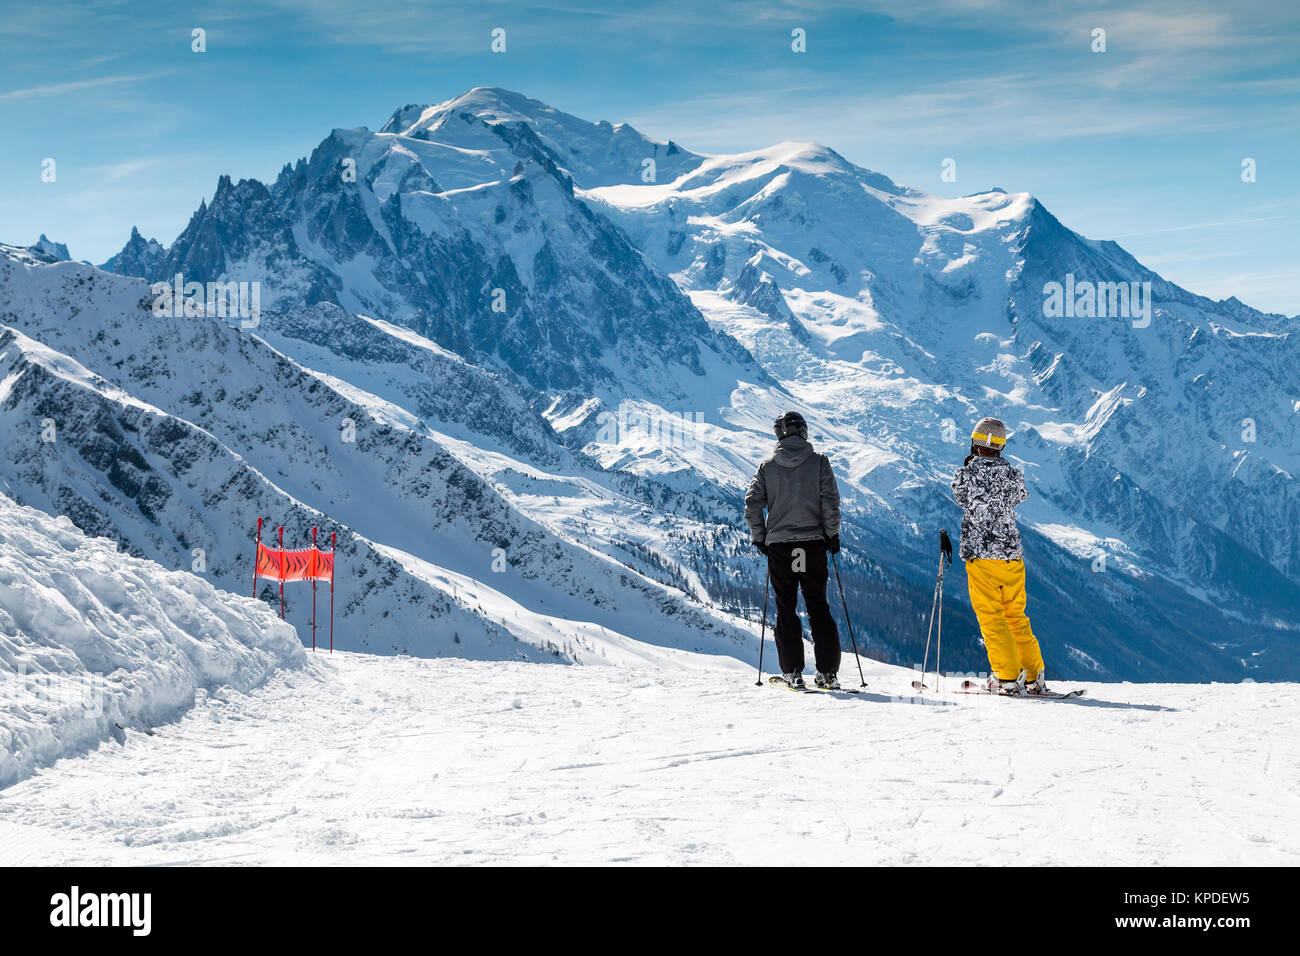 Niña, red ski pantalones, chaquetas, guantes, casco, gafas, botas de esquí  de color amarillo, rojo y amarillo los esquís esquí de montaña nevada  Fotografía de stock - Alamy